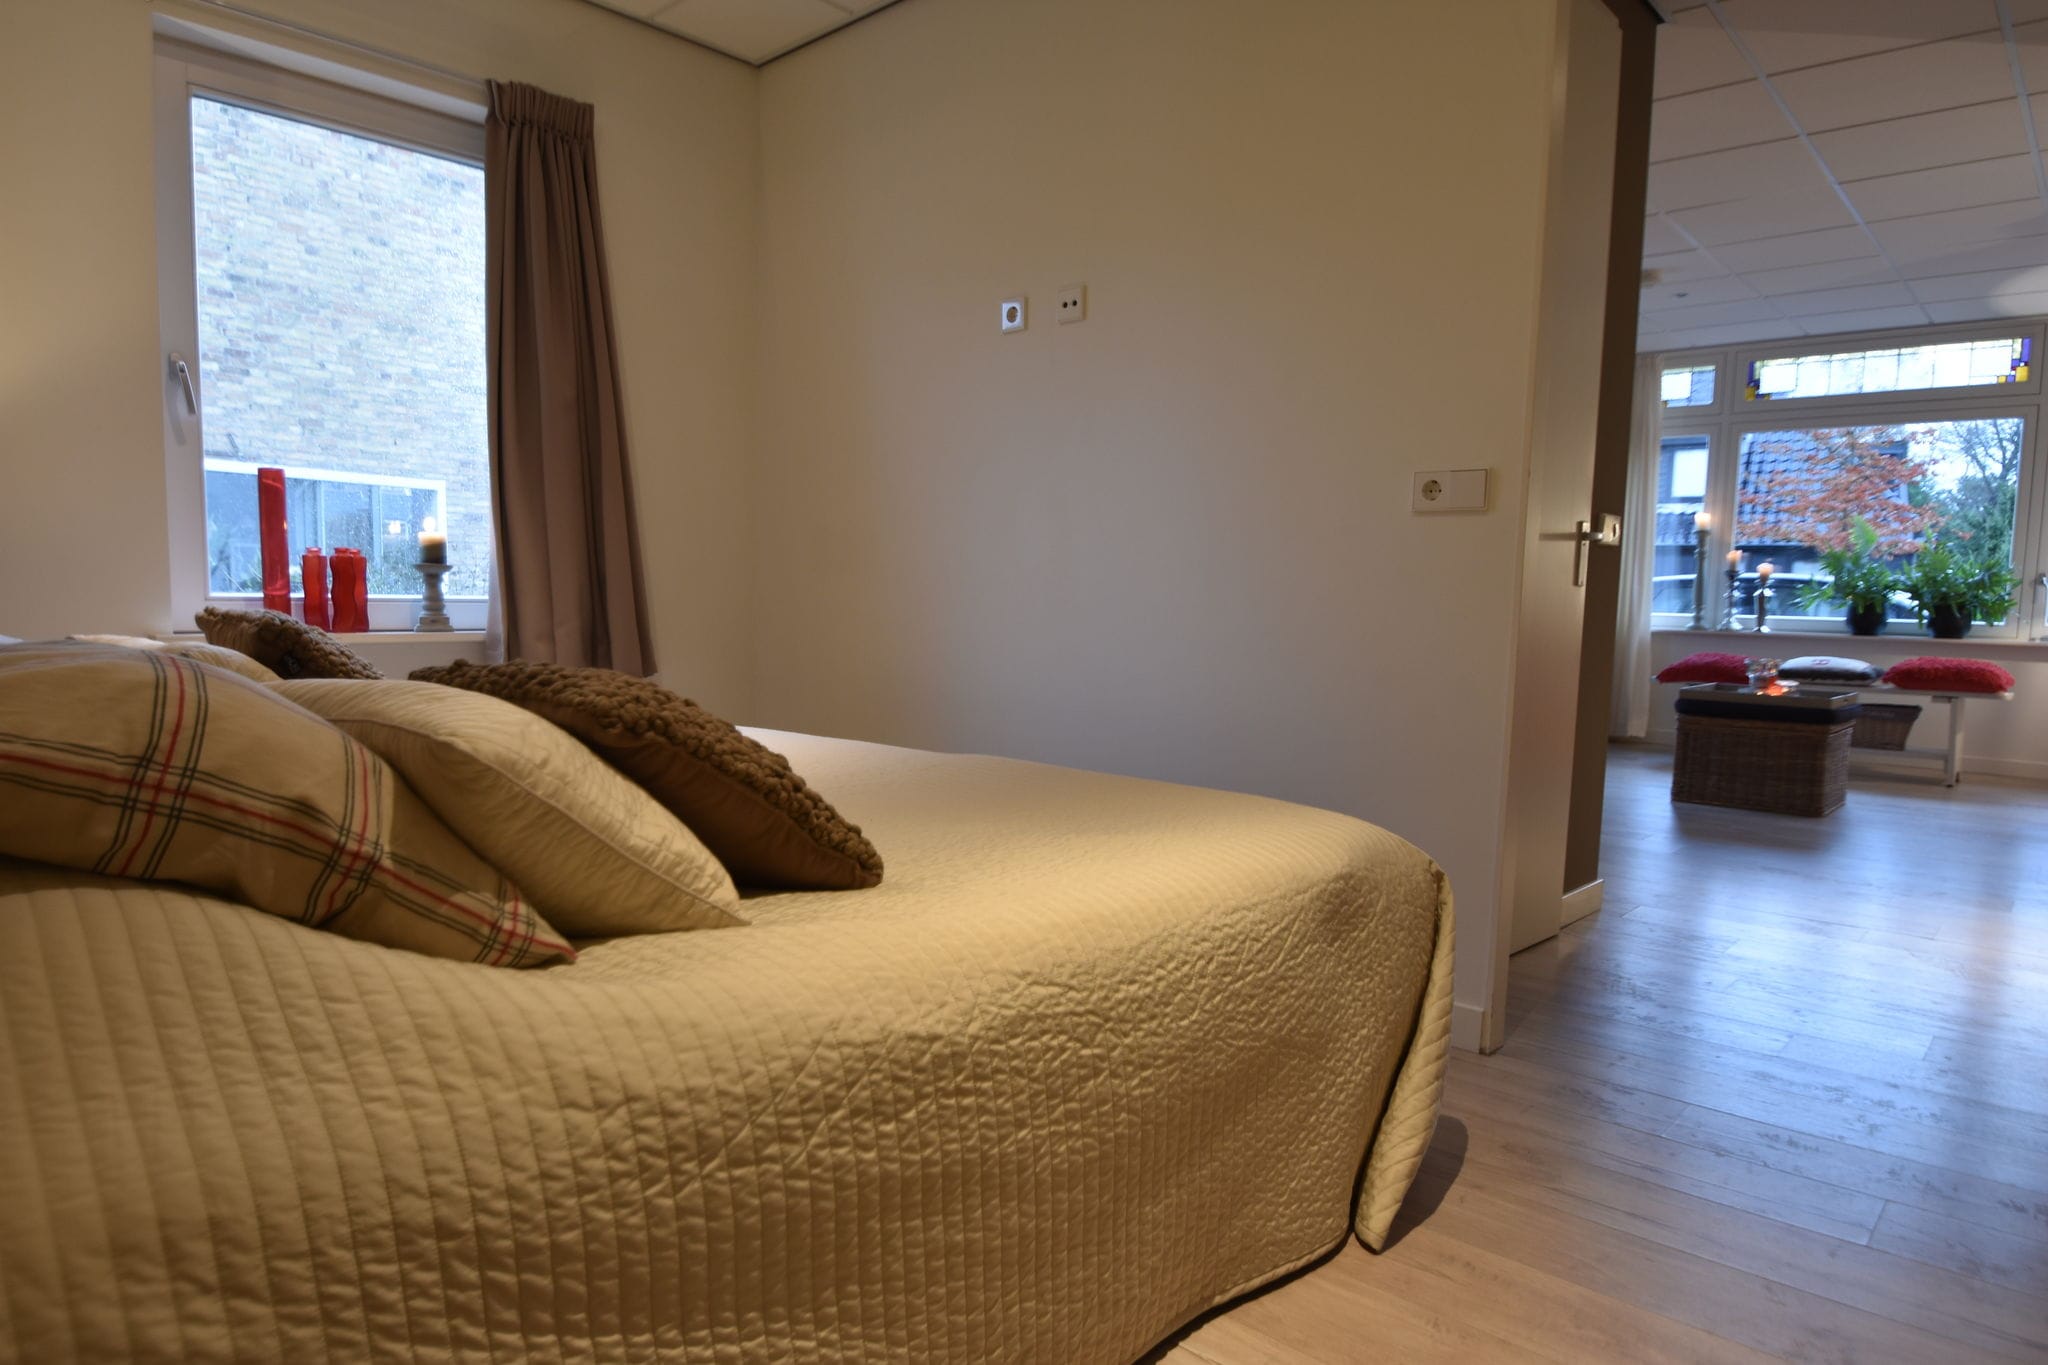 Luxury flat near lively centre of Bergen